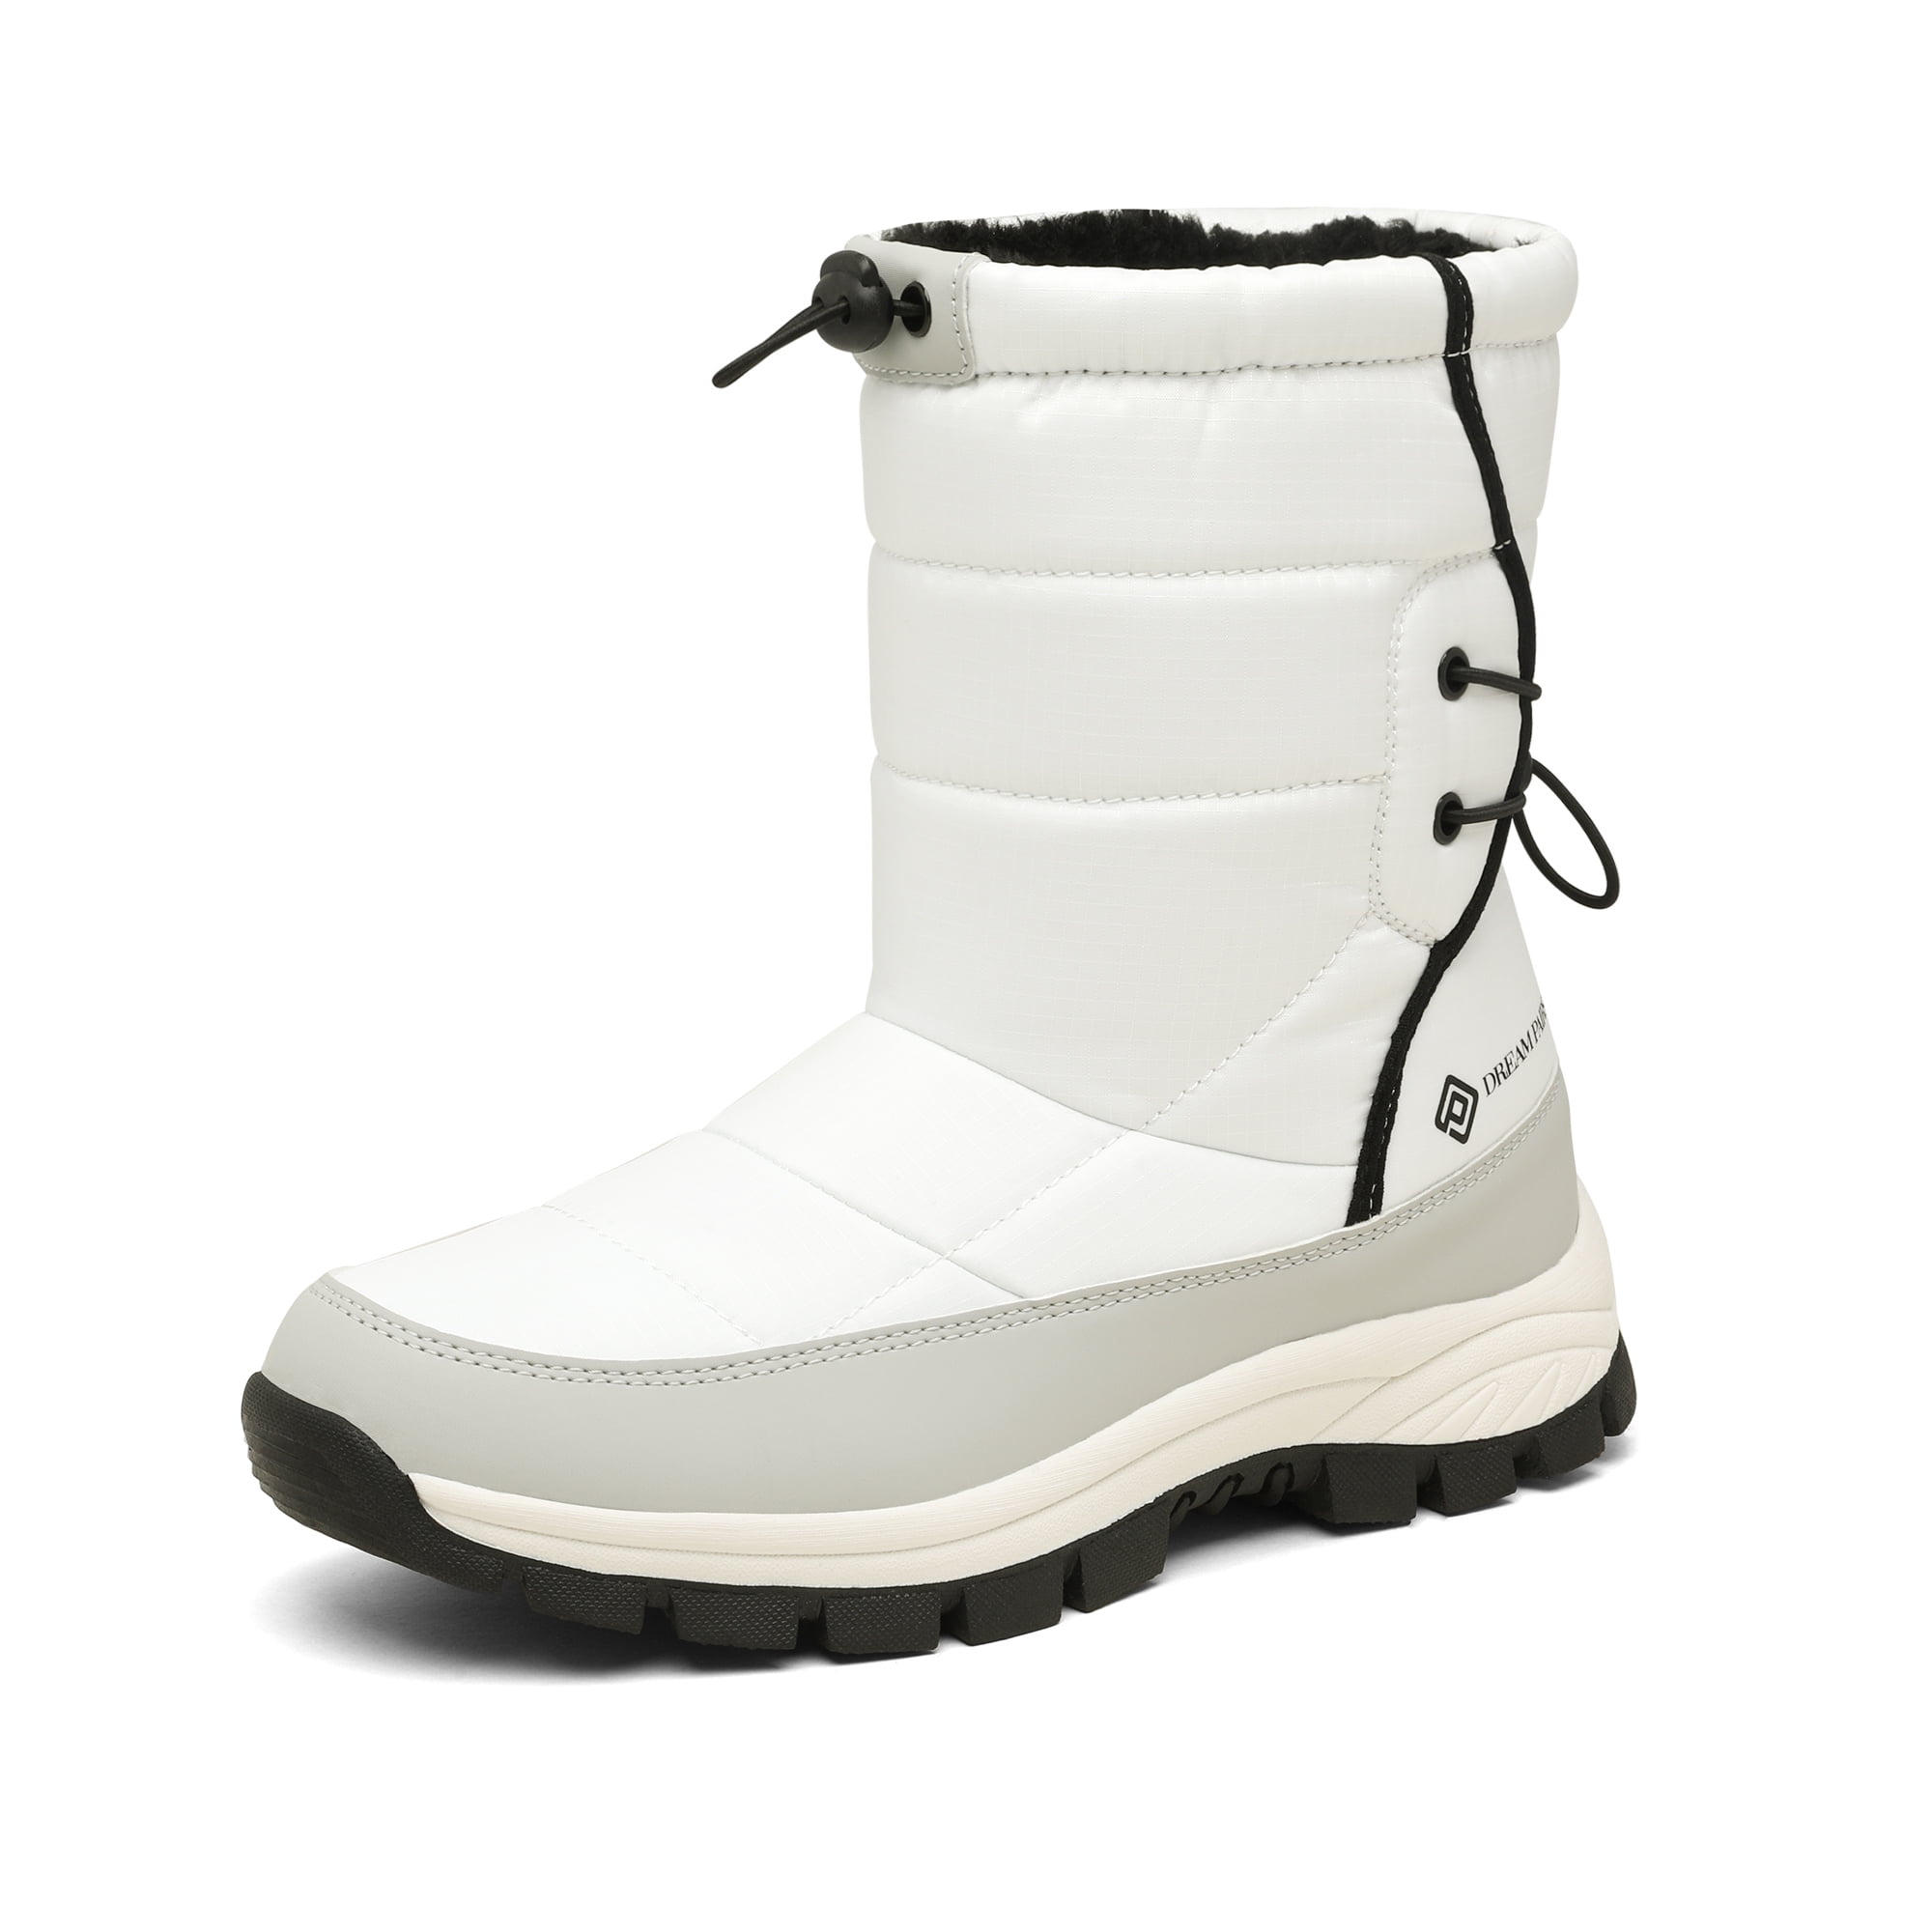 DREAM PAIRS Women’s Winter Snow Boots Waterproof Lightweight Warm ...